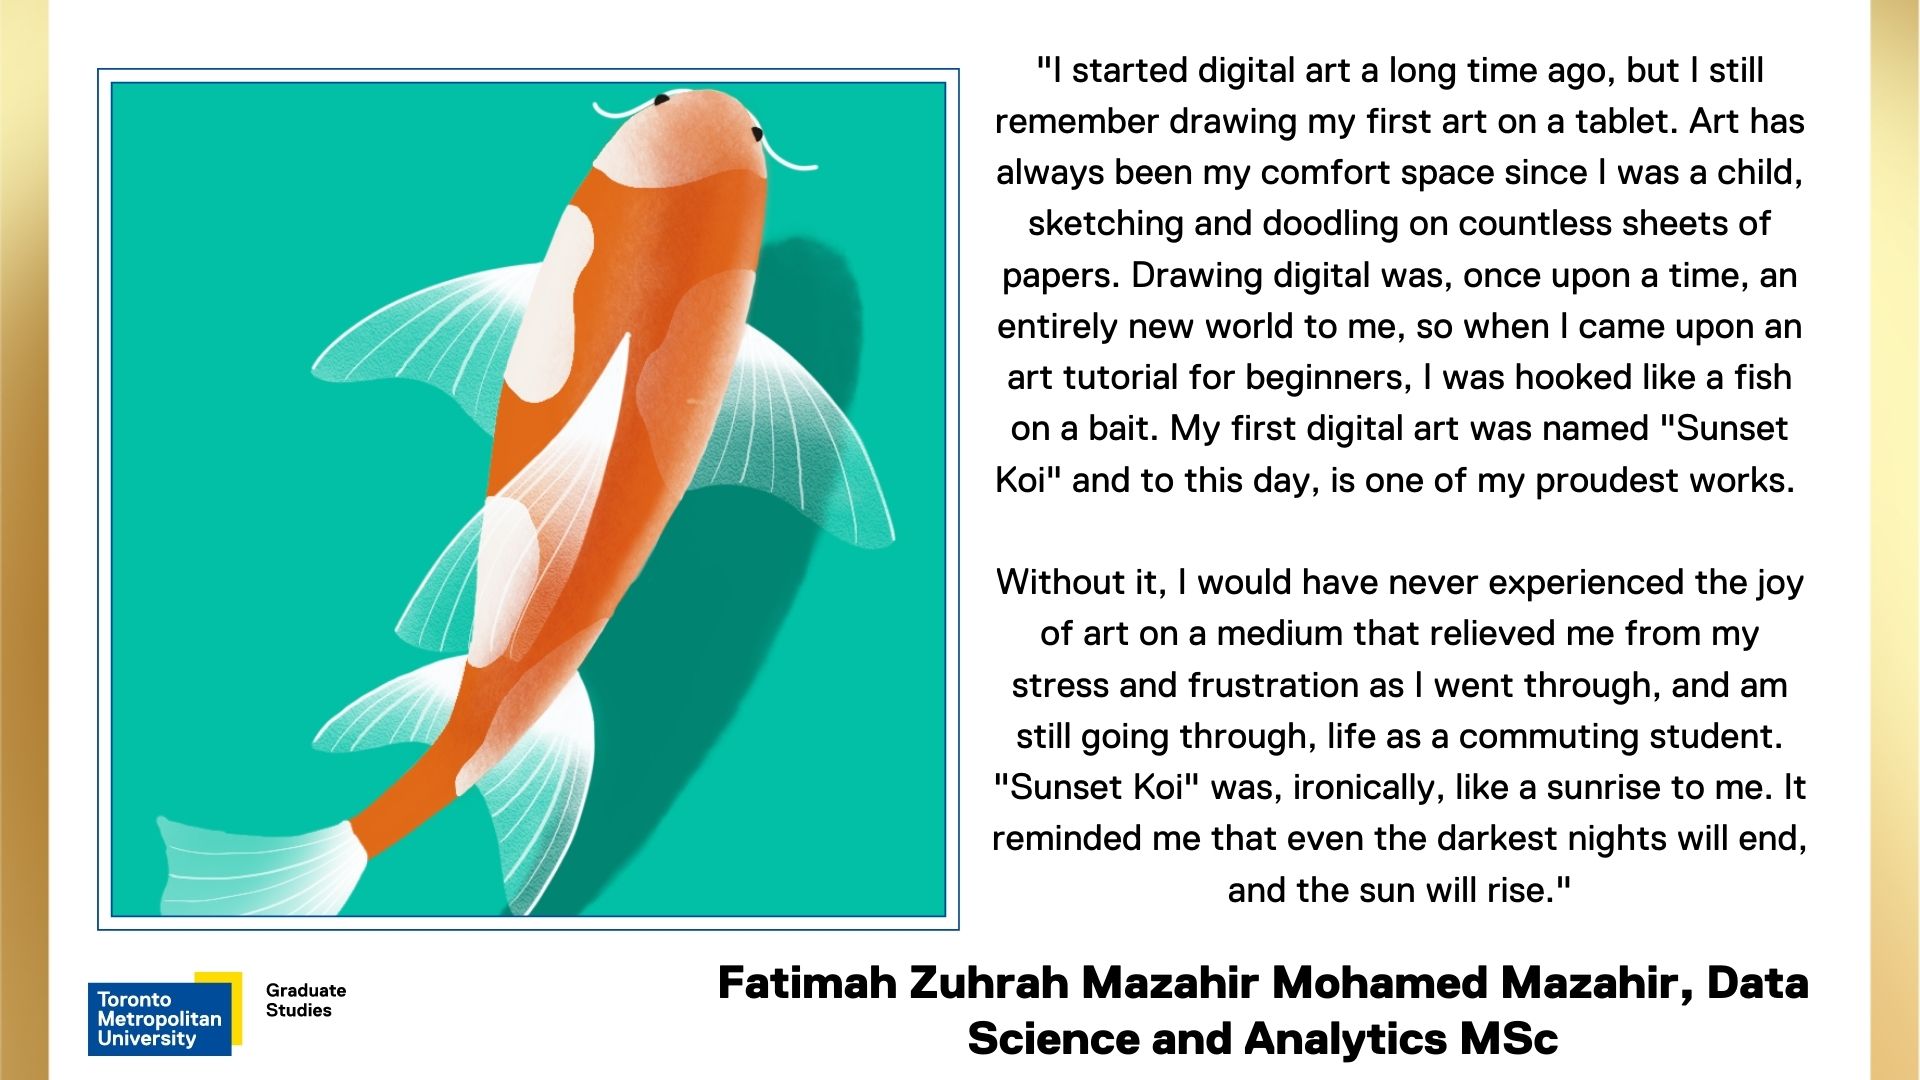 Fatimah-Zuhrah-Mazahir-Mohamed-Mazahir. Digitally drawn white and orange koi fish against teal background. 